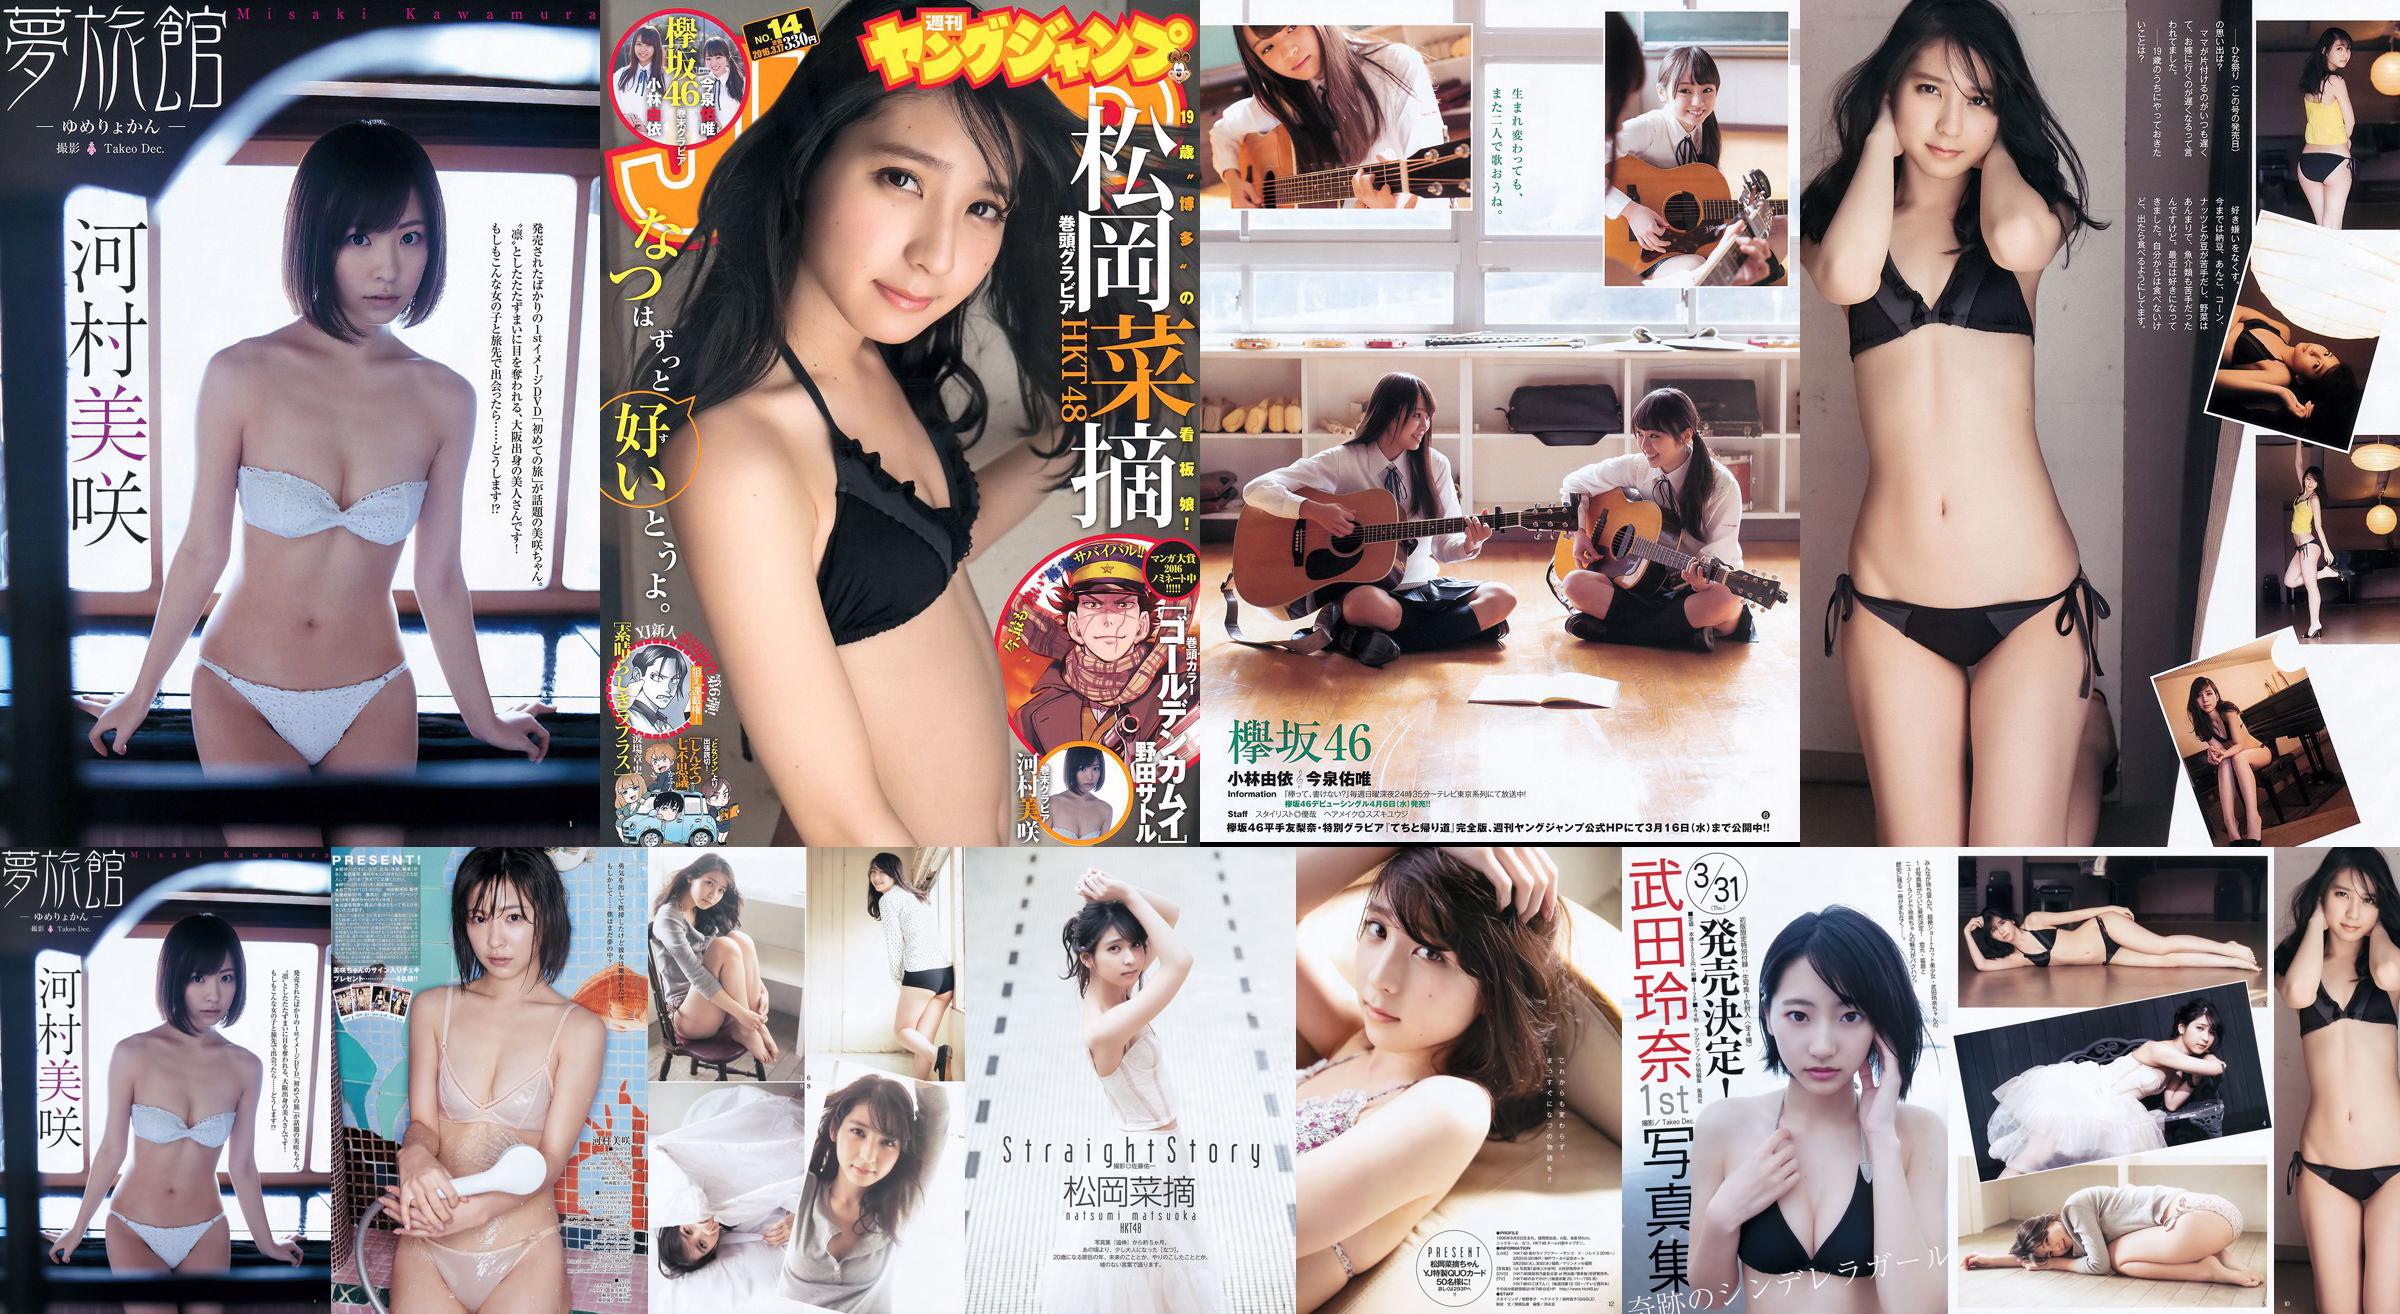 Pilihan Sayur Muraoka Yui Kobayashi Yui Imaizumi Misaki Kawamura [Lompat Muda Mingguan] Majalah Foto No. 14 2016 No.76266d Halaman 1